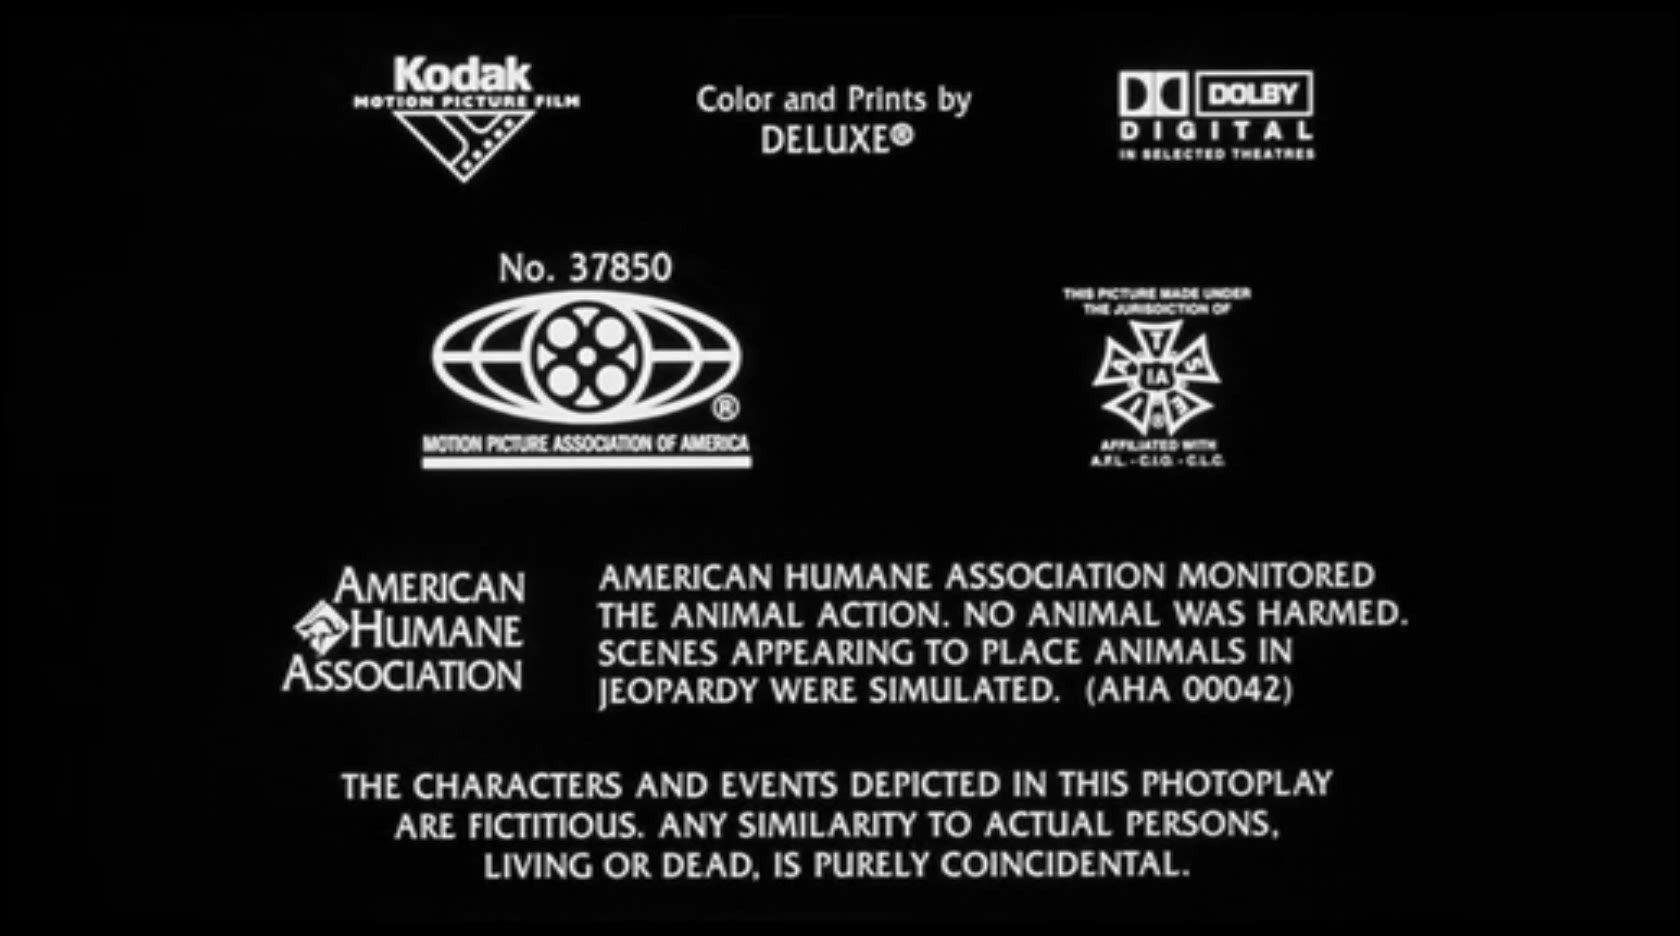 Other MPAA Logo - Image - Cast Away MPAA Credits.jpg | Logopedia | FANDOM powered by Wikia